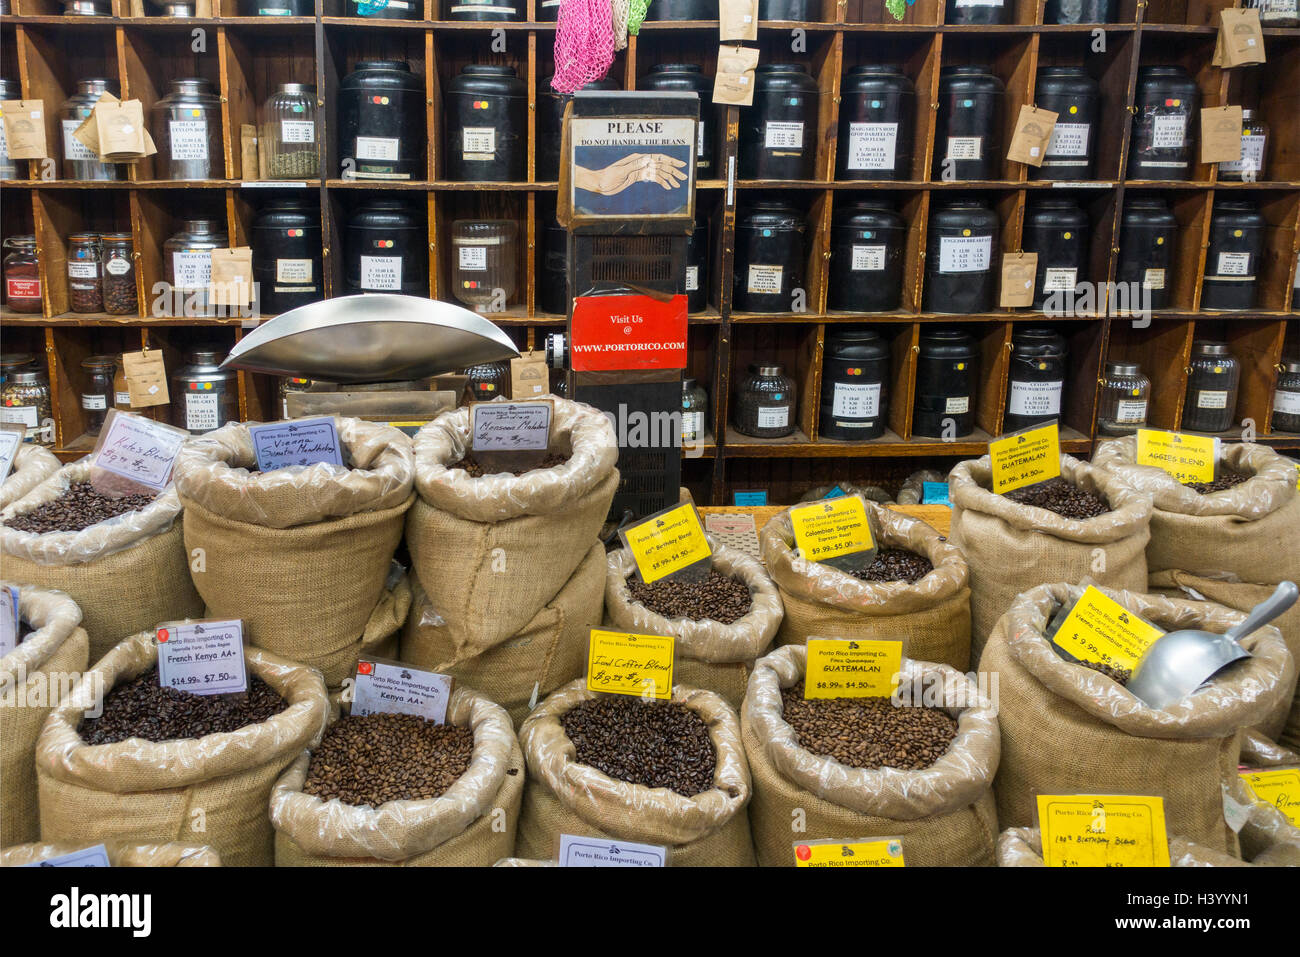 Porto Rico Coffee Importing Company Nyc Store Shop Stock Photo Alamy